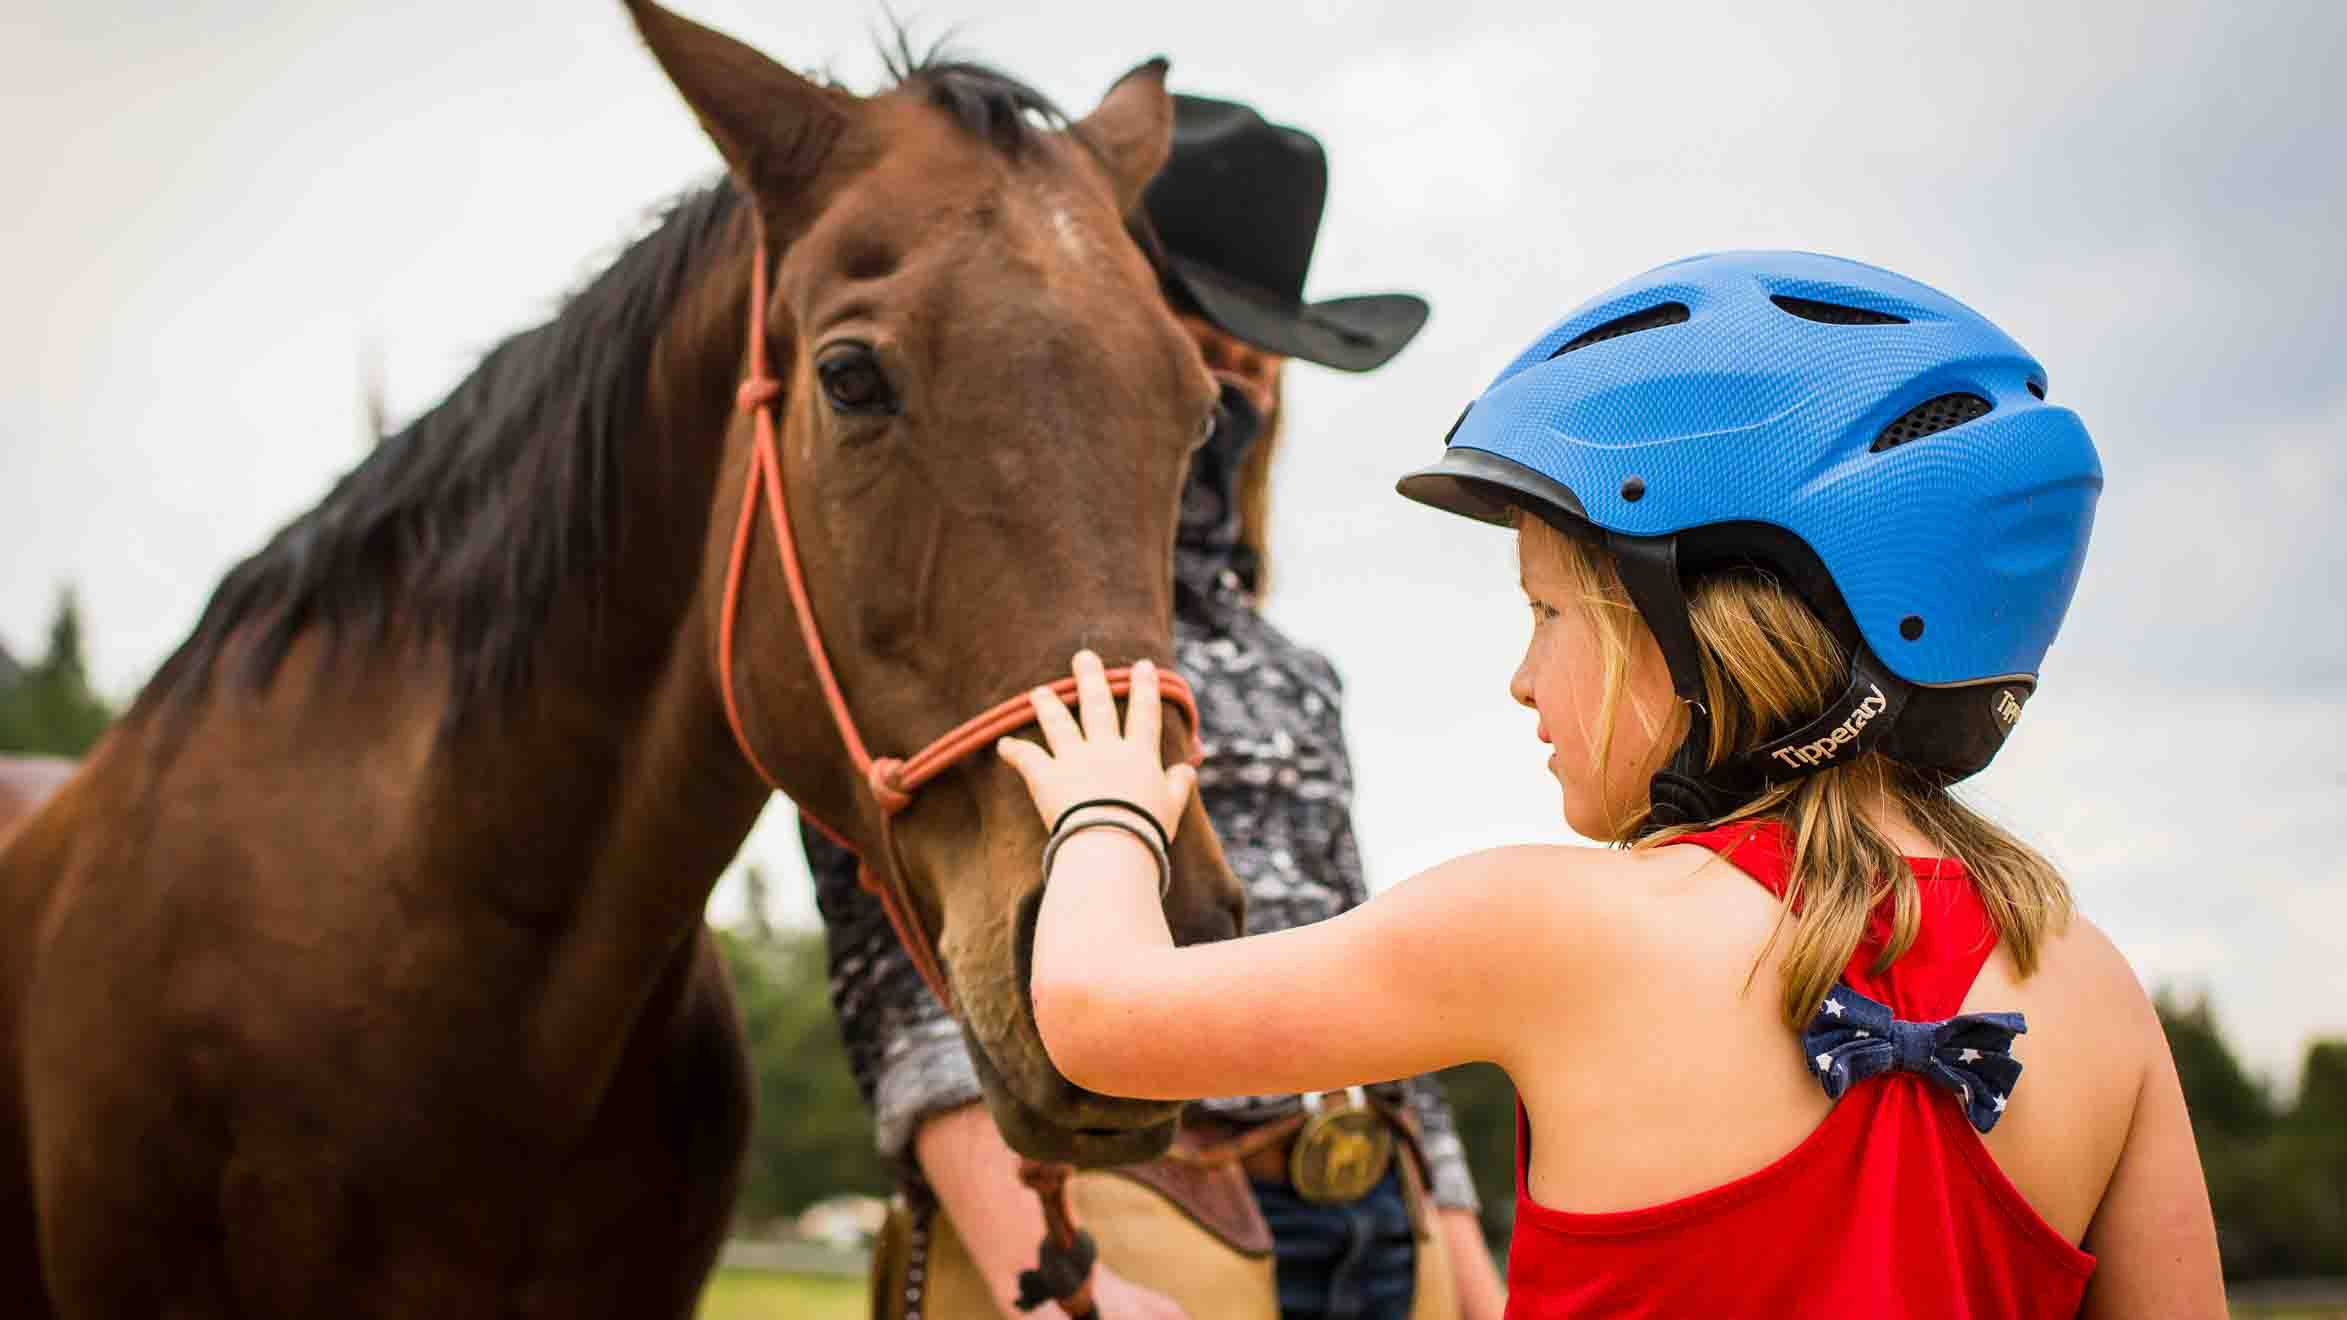 Little girl petting horse